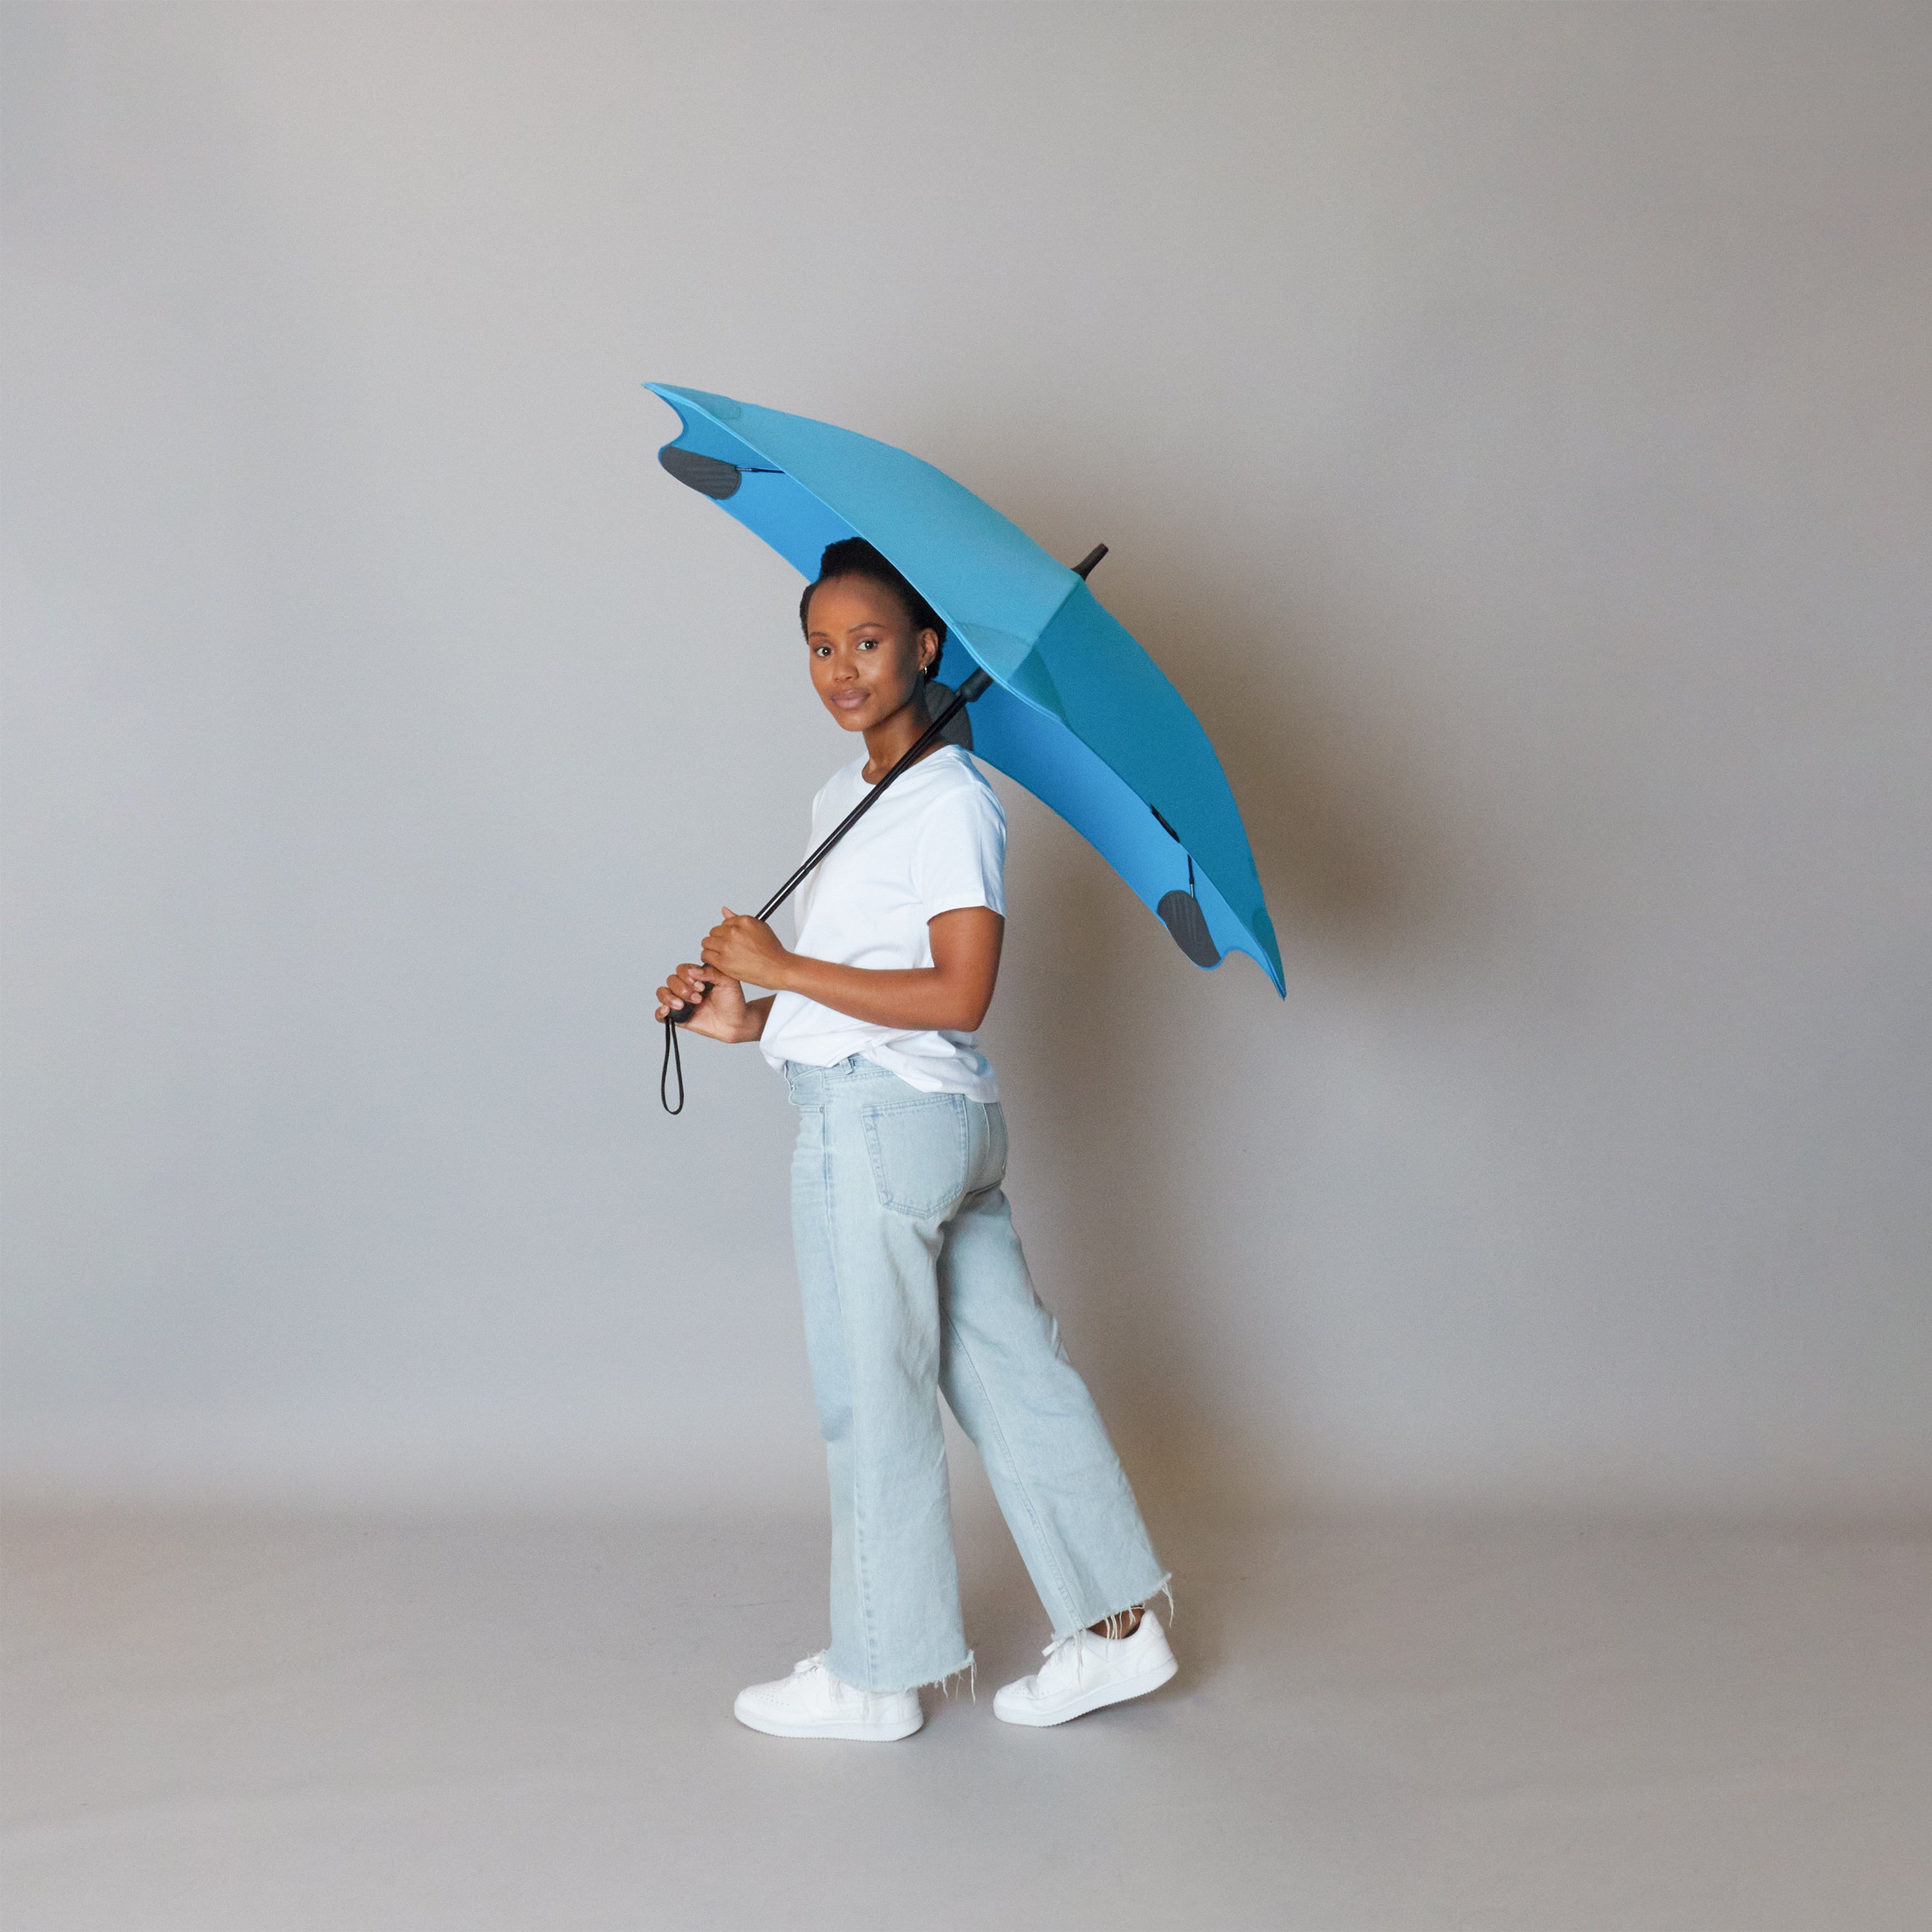 2020 Classic Blue Blunt Umbrella Model Side View